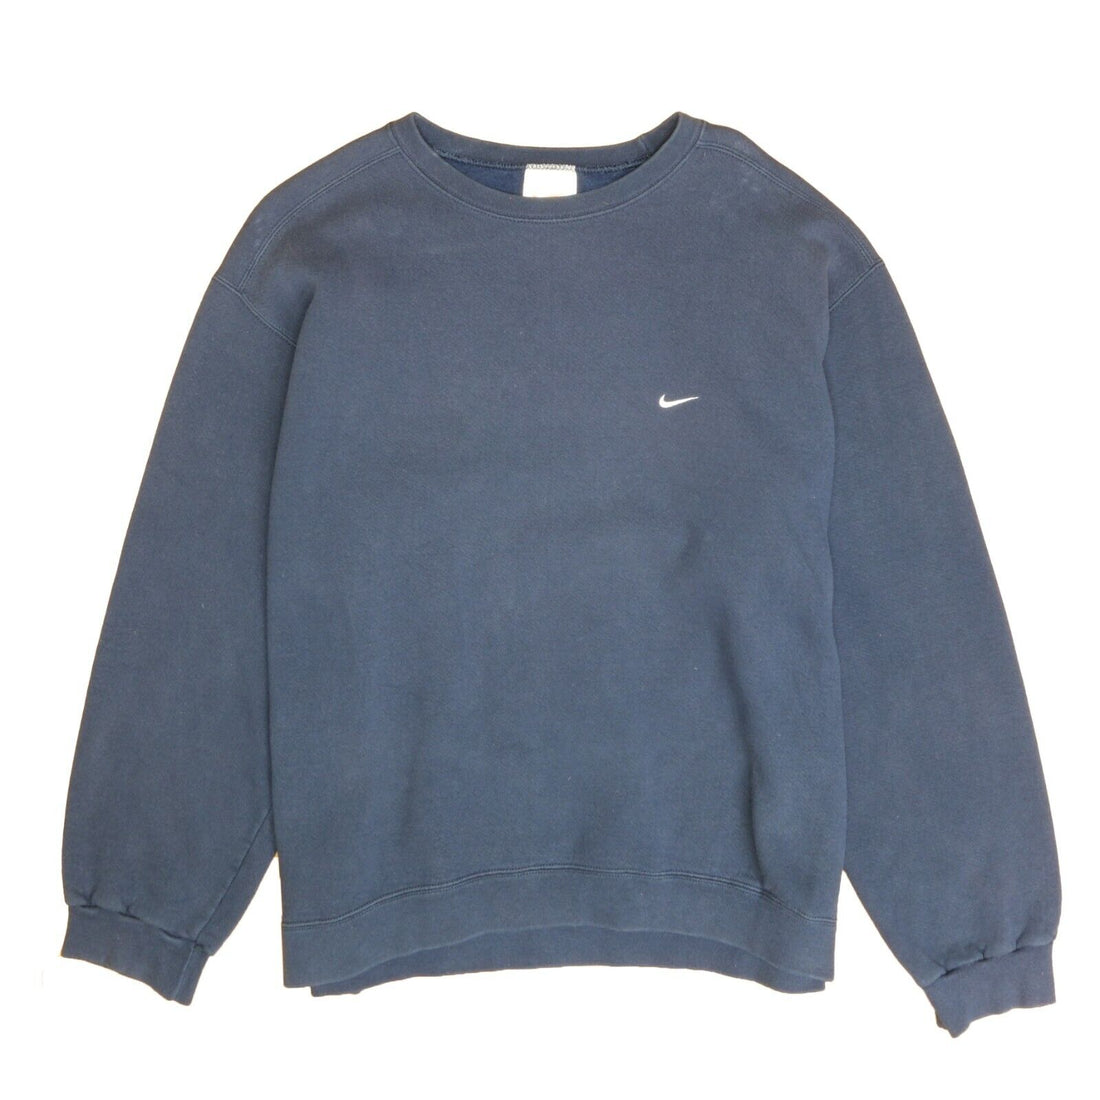 Vintage Nike Sweatshirt Crewneck Size XL Navy Blue Embroidered Swoosh 90s